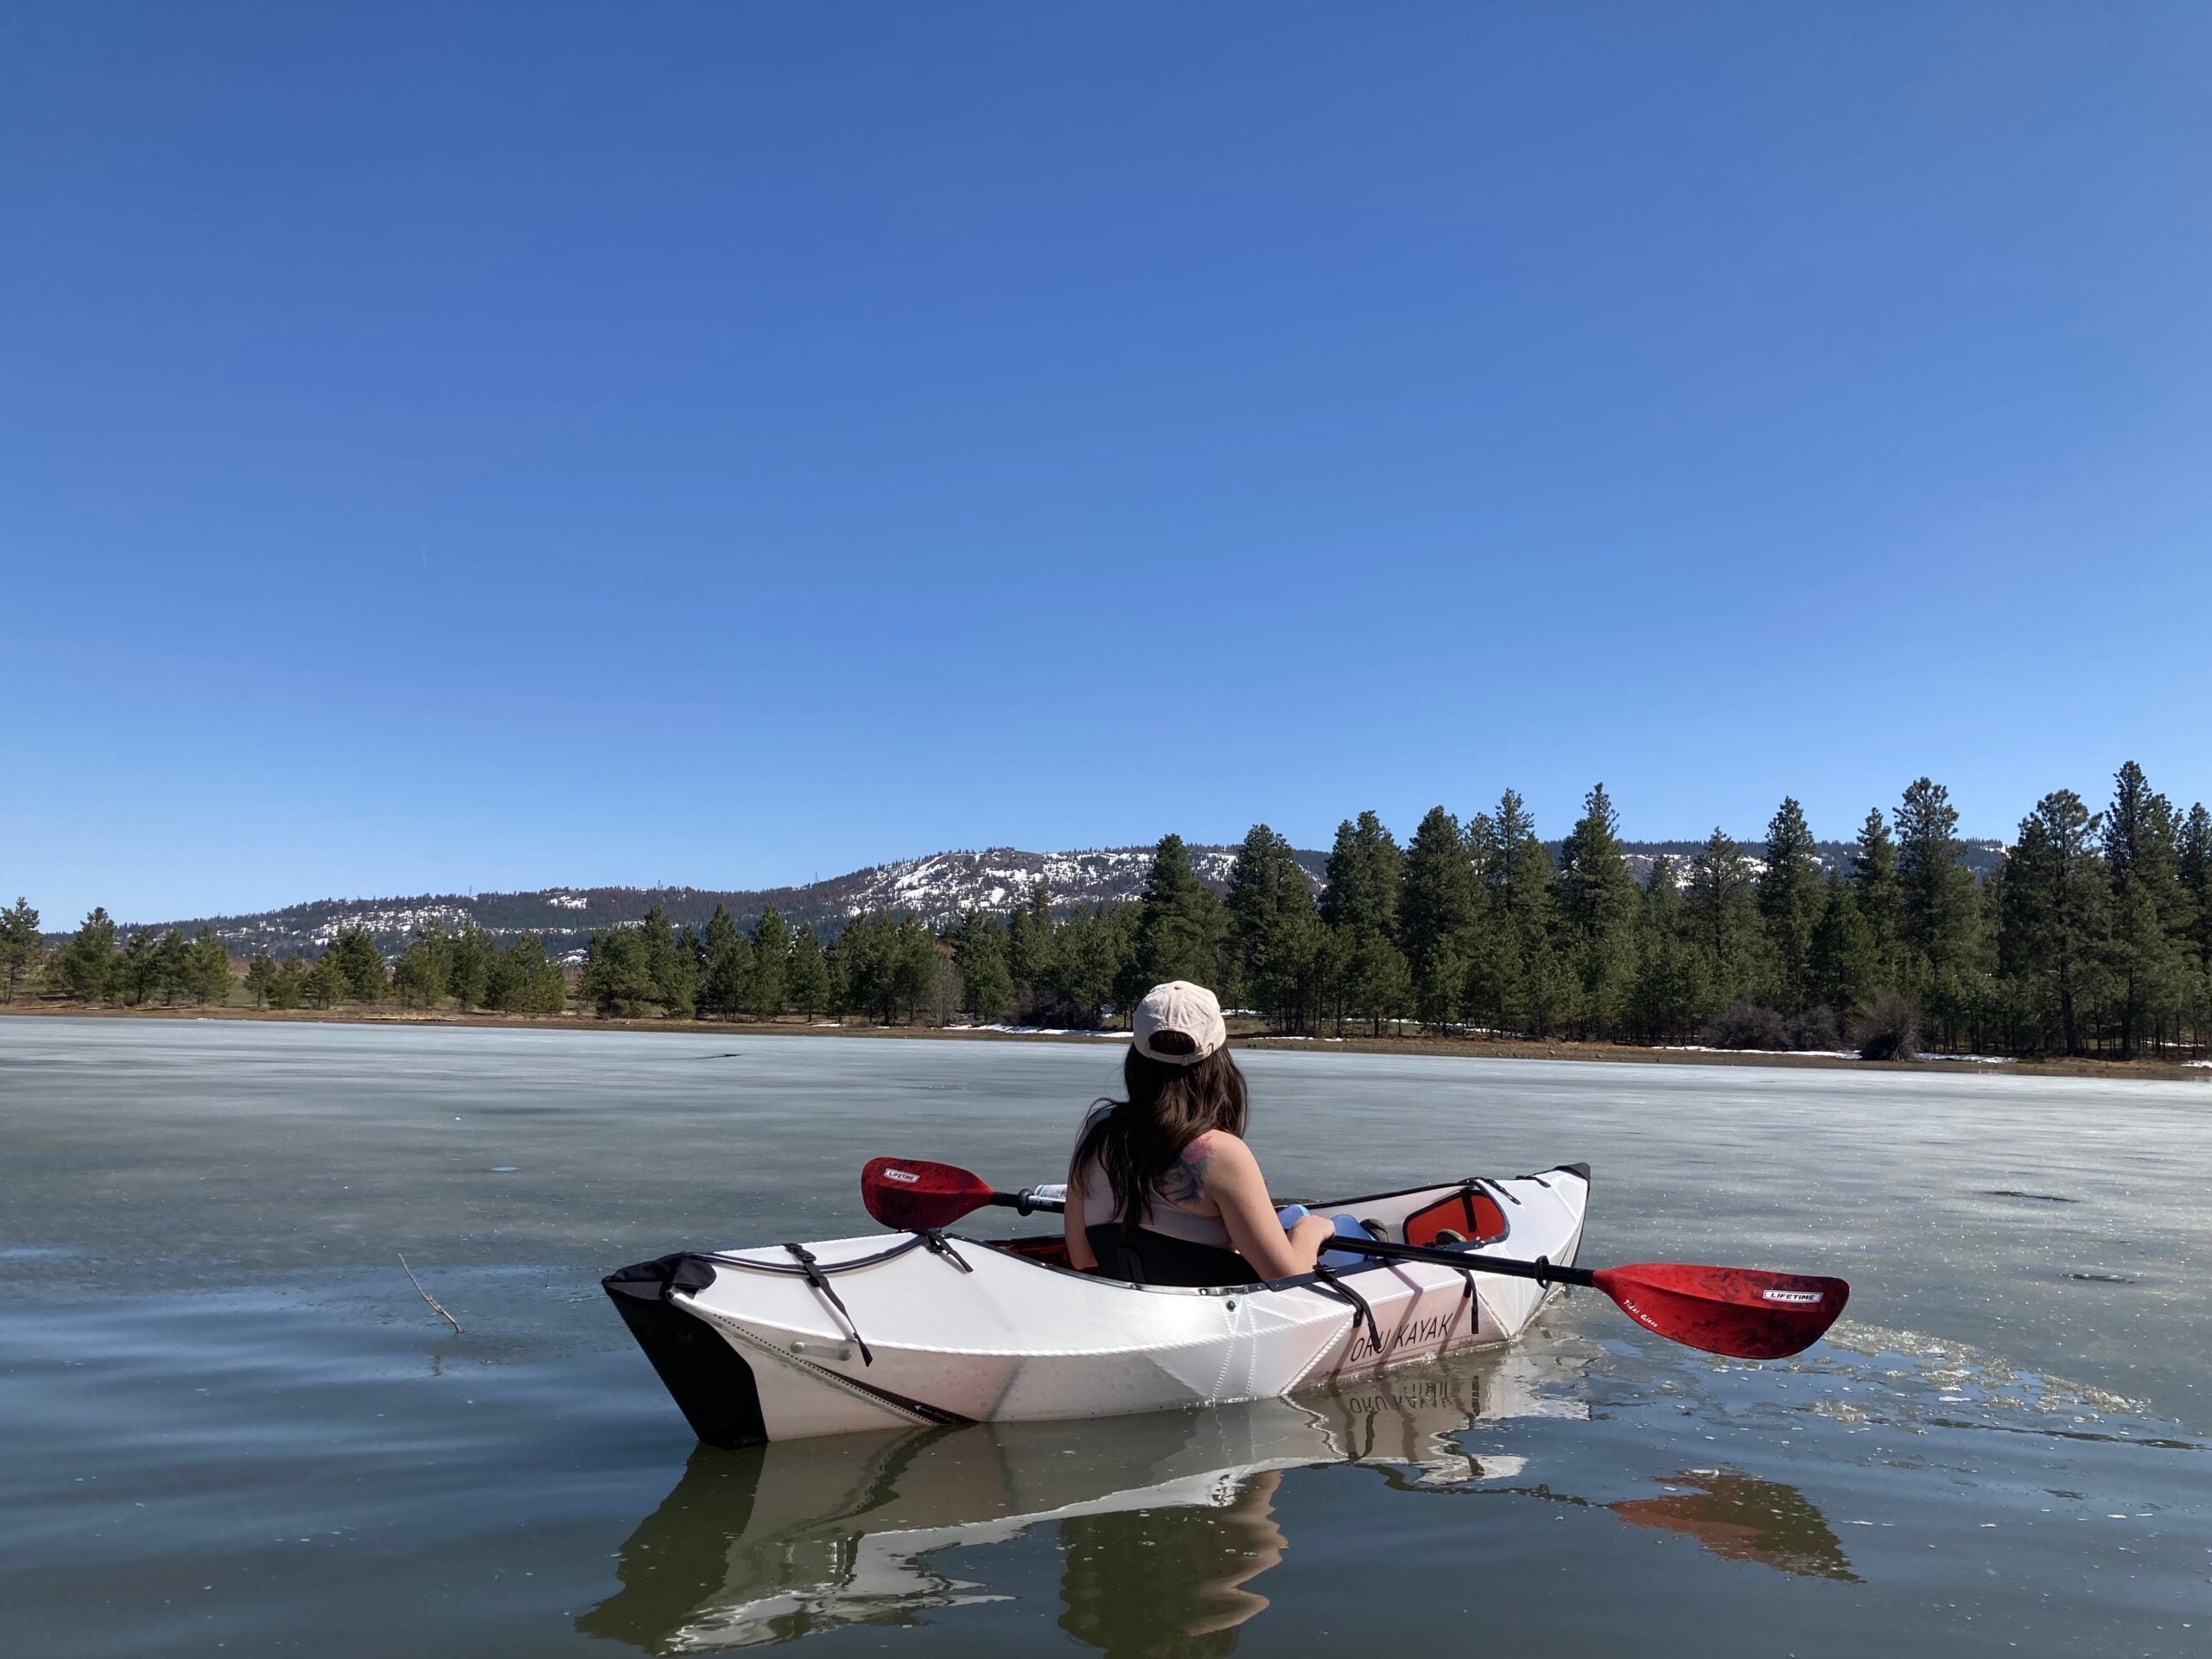 Oru Kayak Review: We Tested the Folding Kayaks